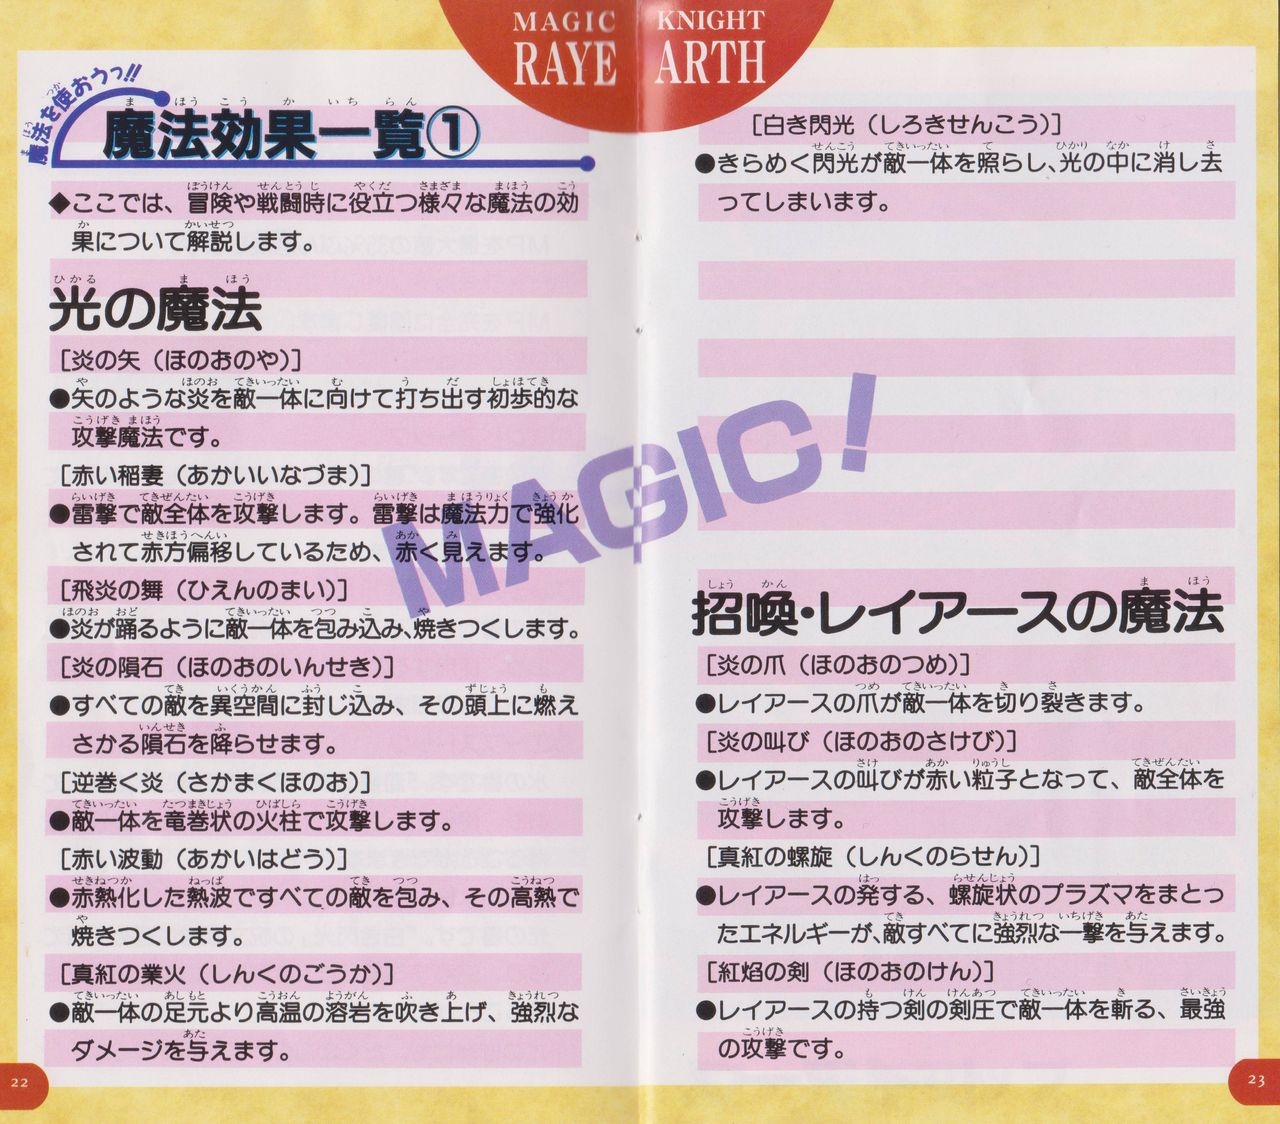 Magic Knight Rayearth - Box & Manual Scans [Super Famicom] 14